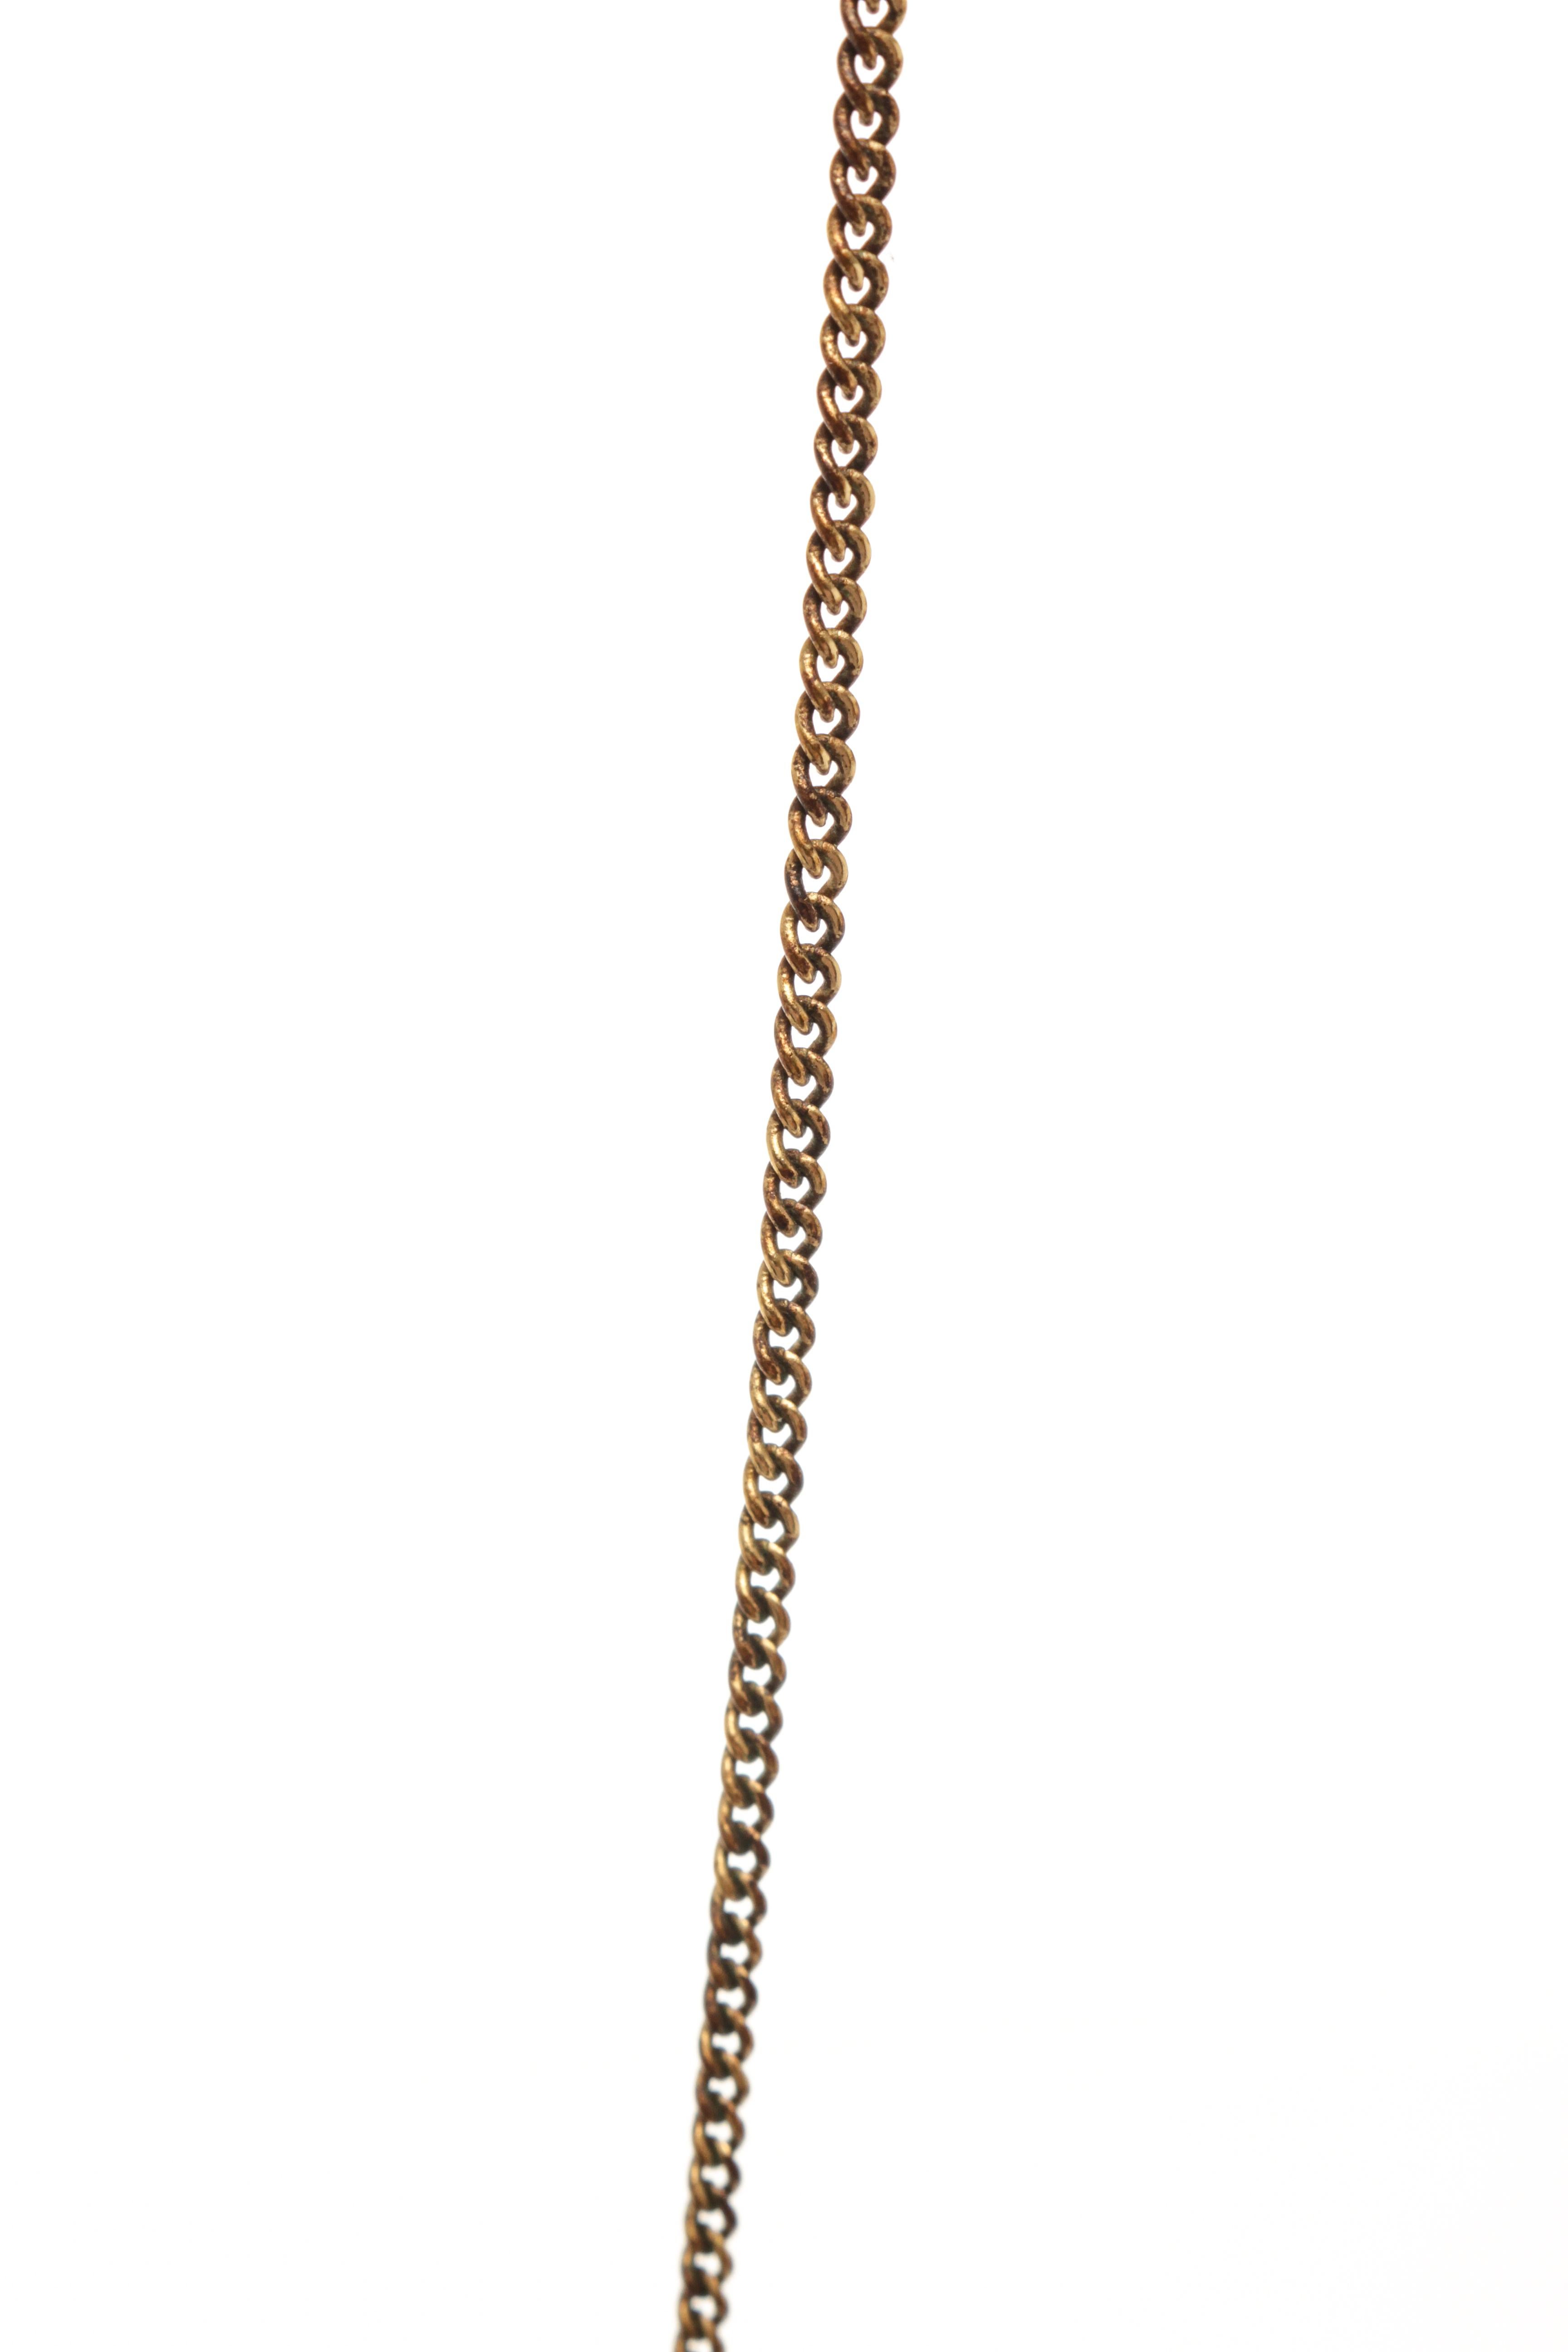 Moderne Chanel - Long collier de pierres précieuses en or en vente